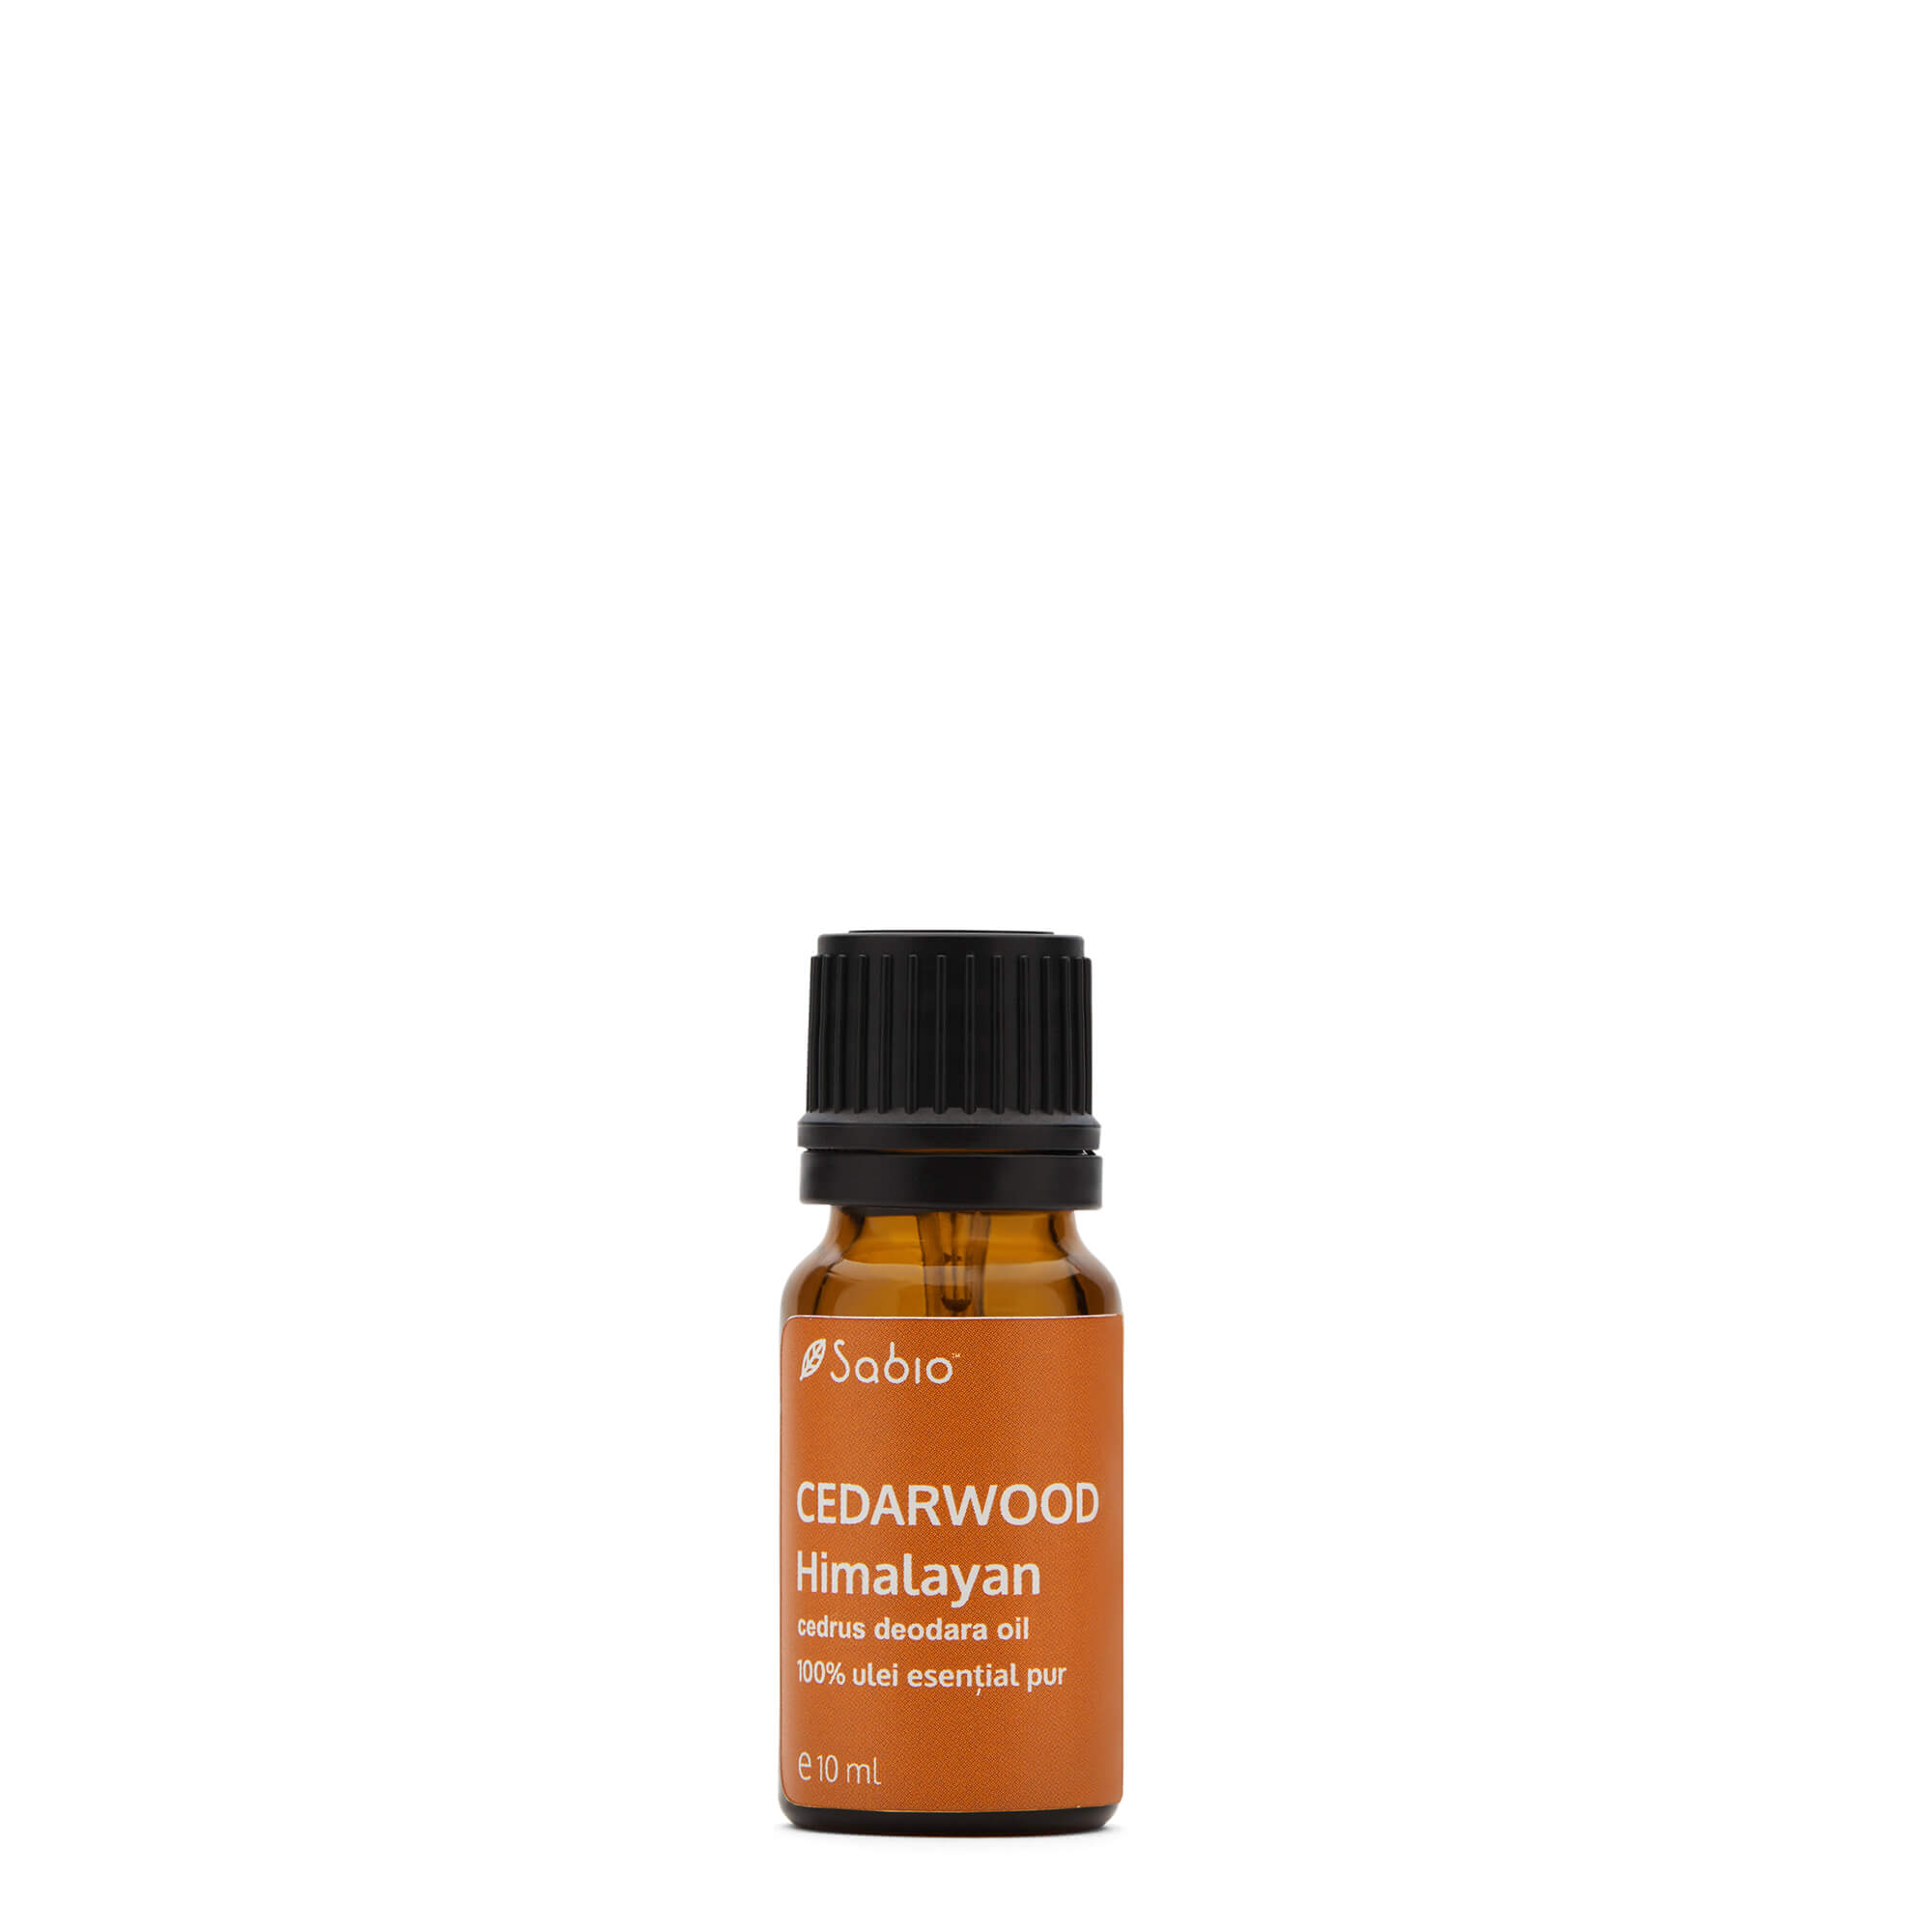 Cedarwood Himalayan essential oil